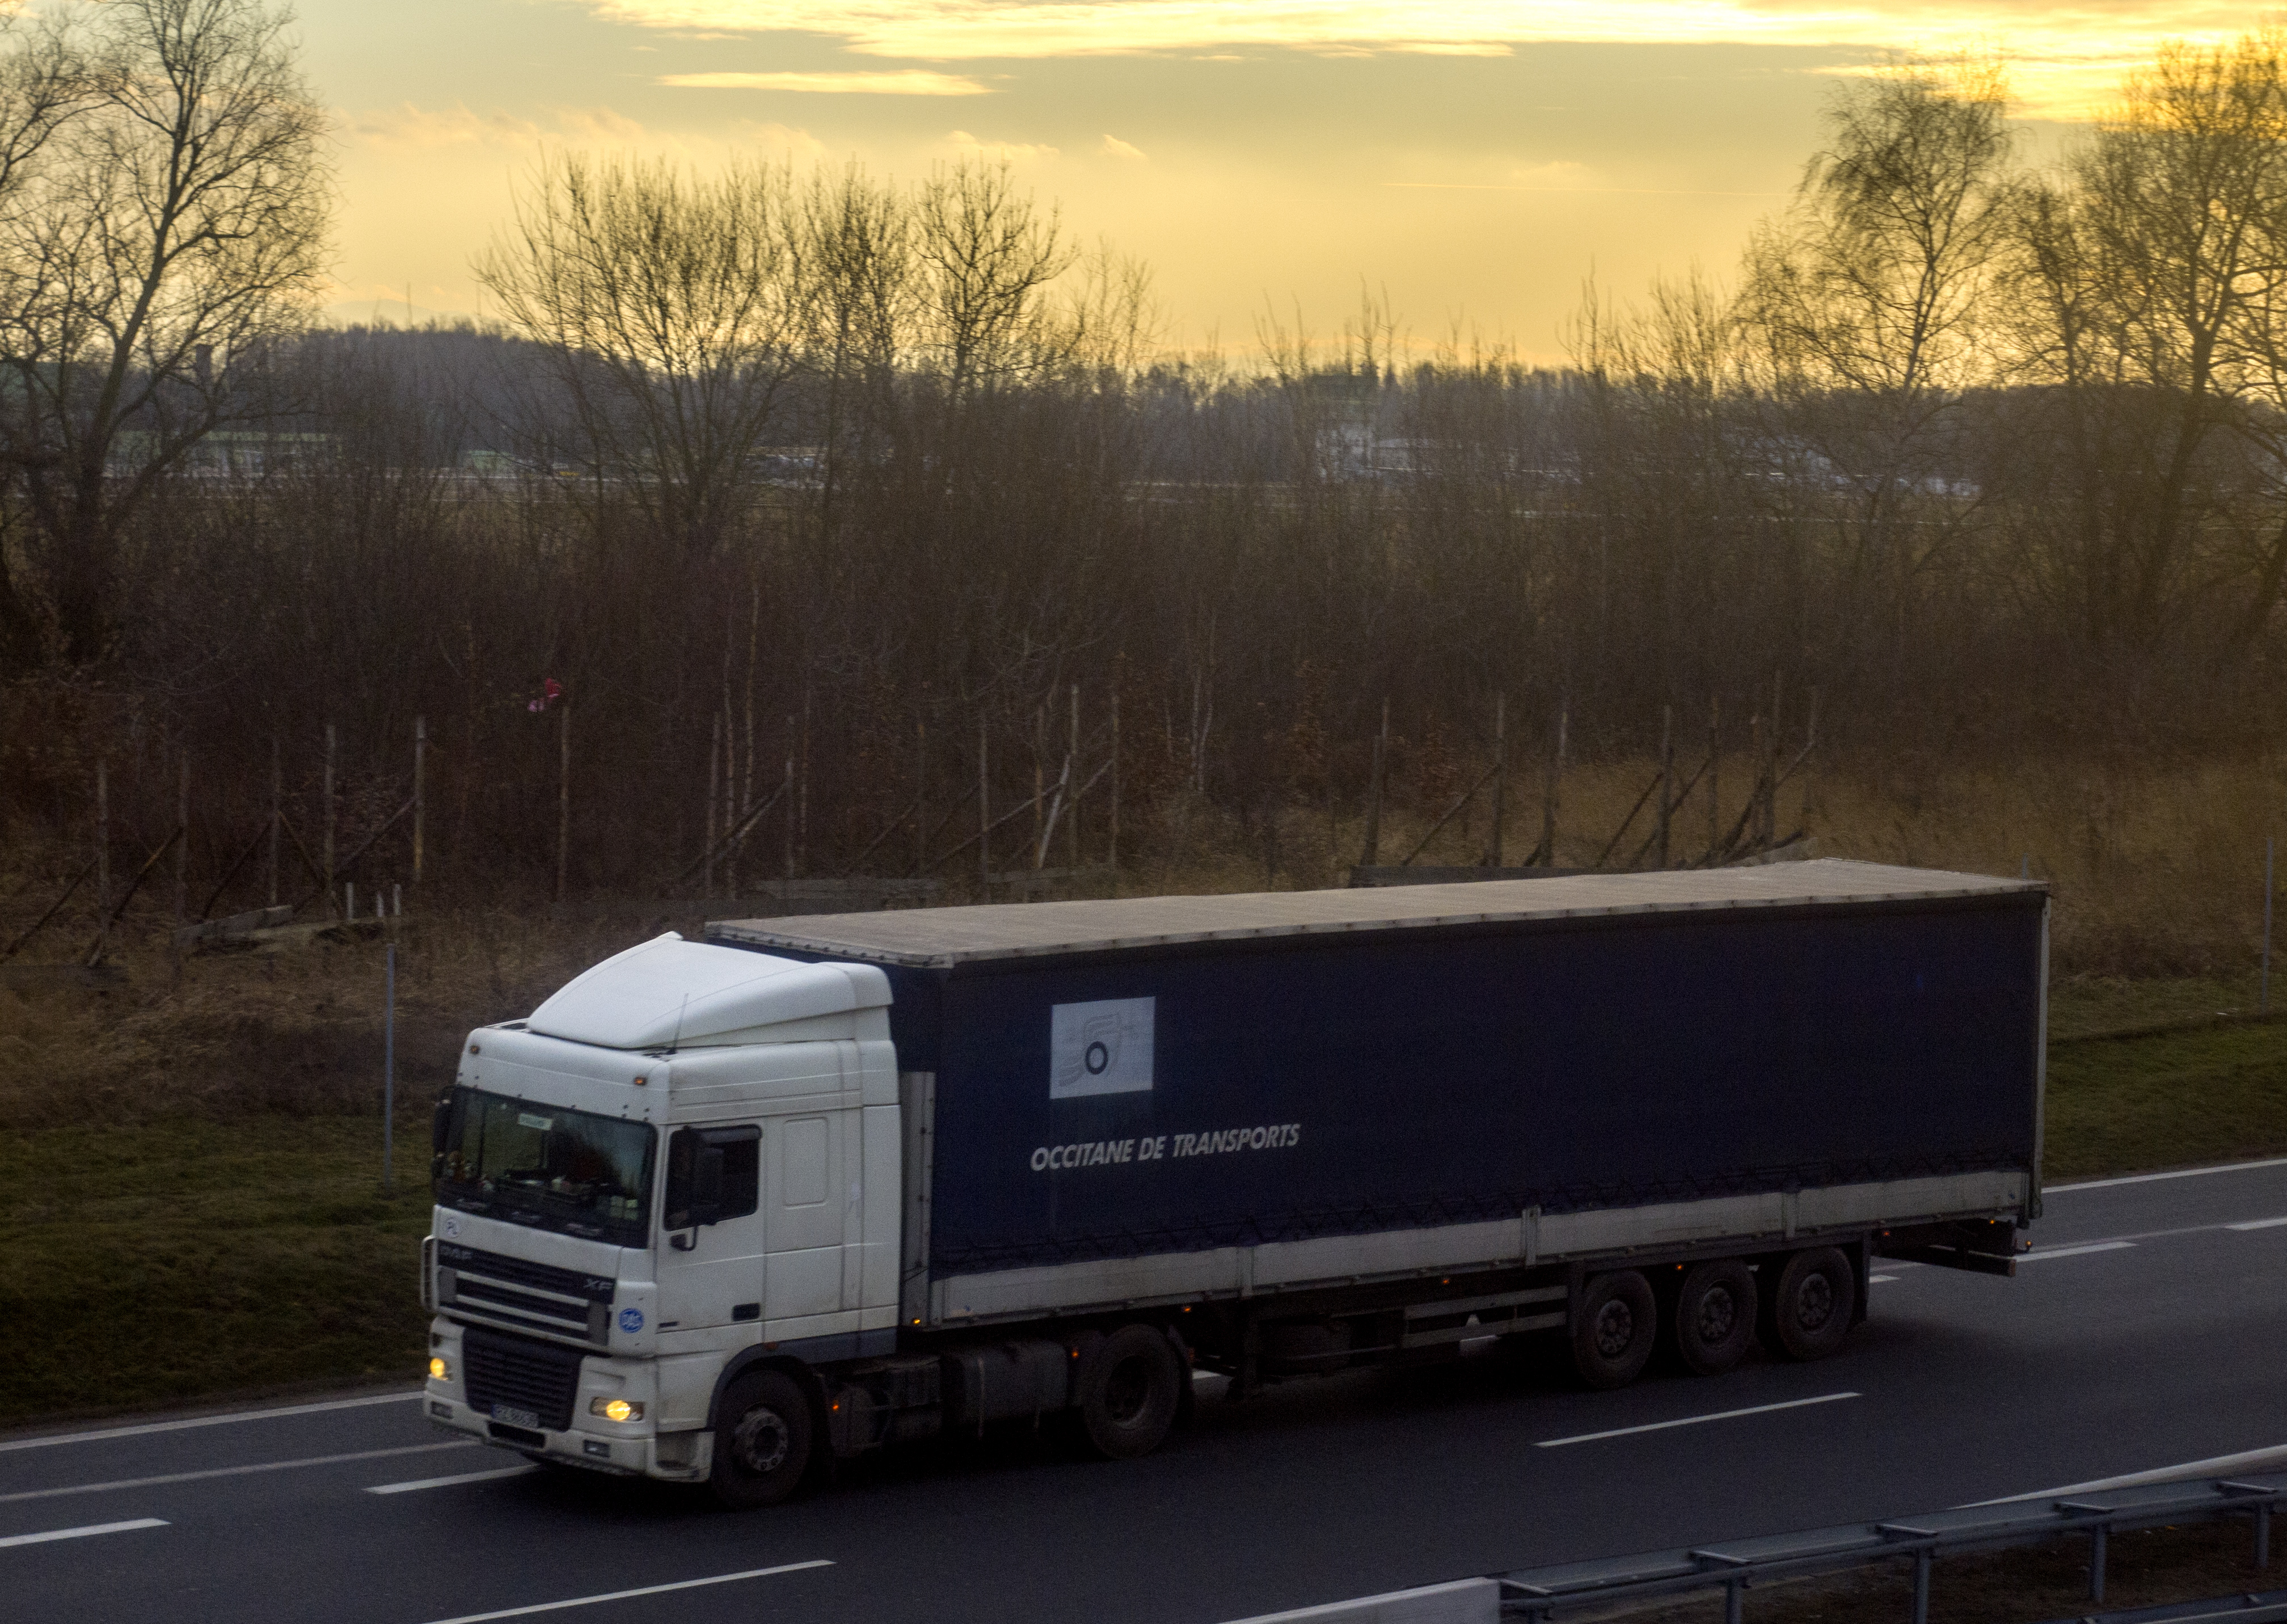 Daf truck, Car, Forwarding, Freight, Goods, HQ Photo